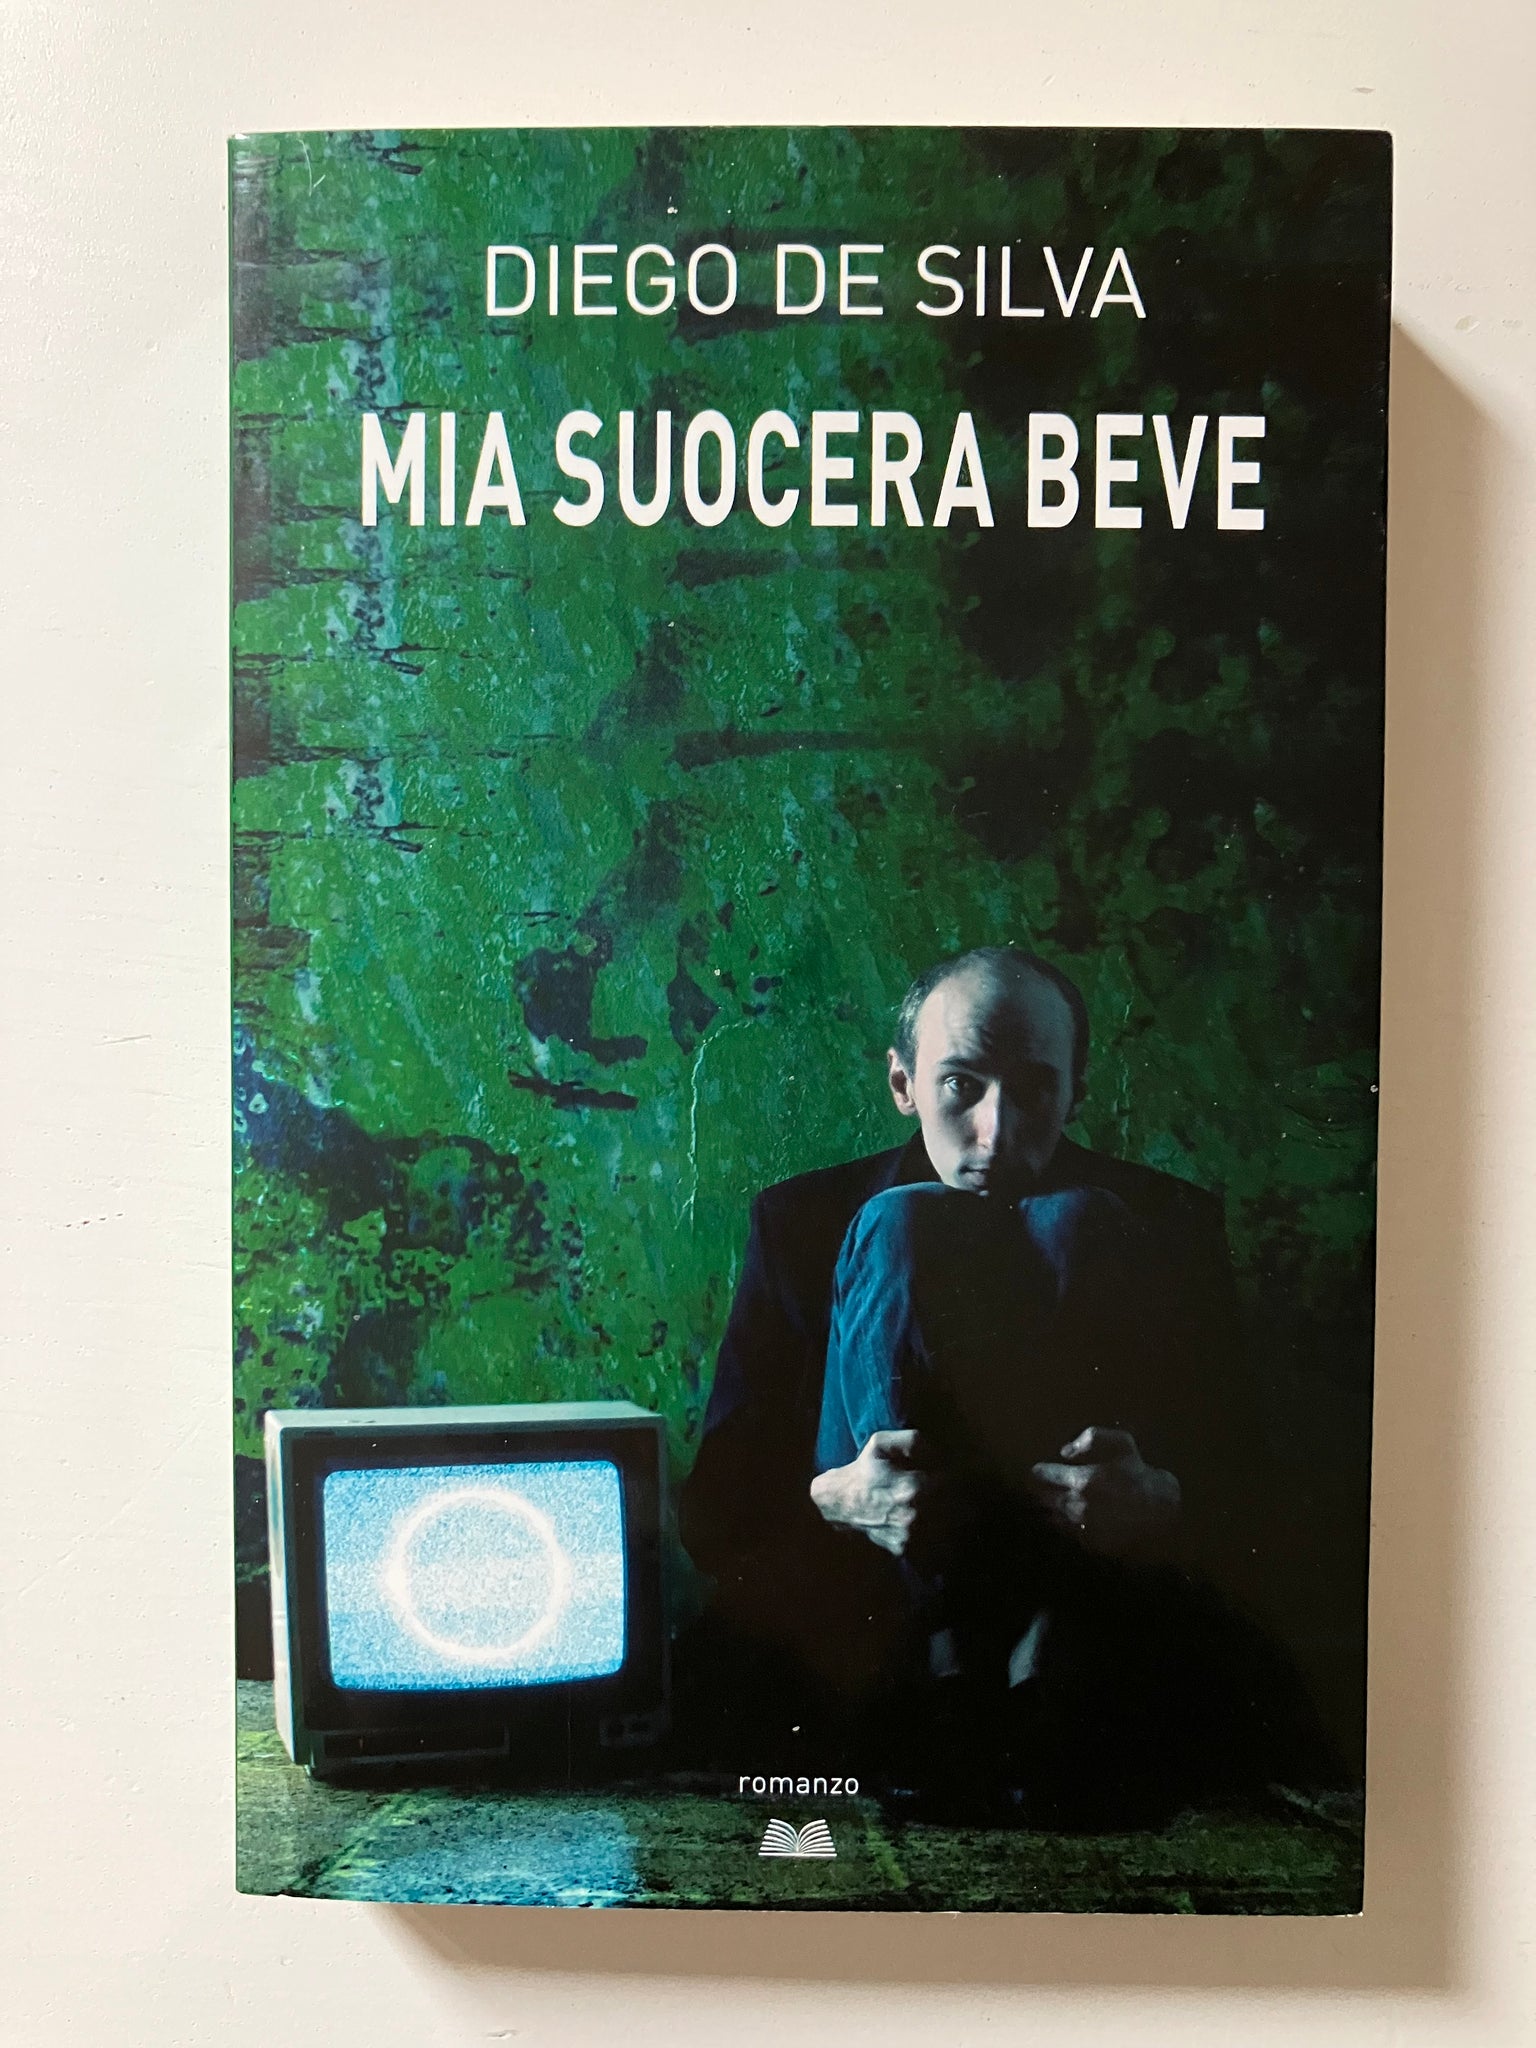 Diego De Silva - Mia suocera beve